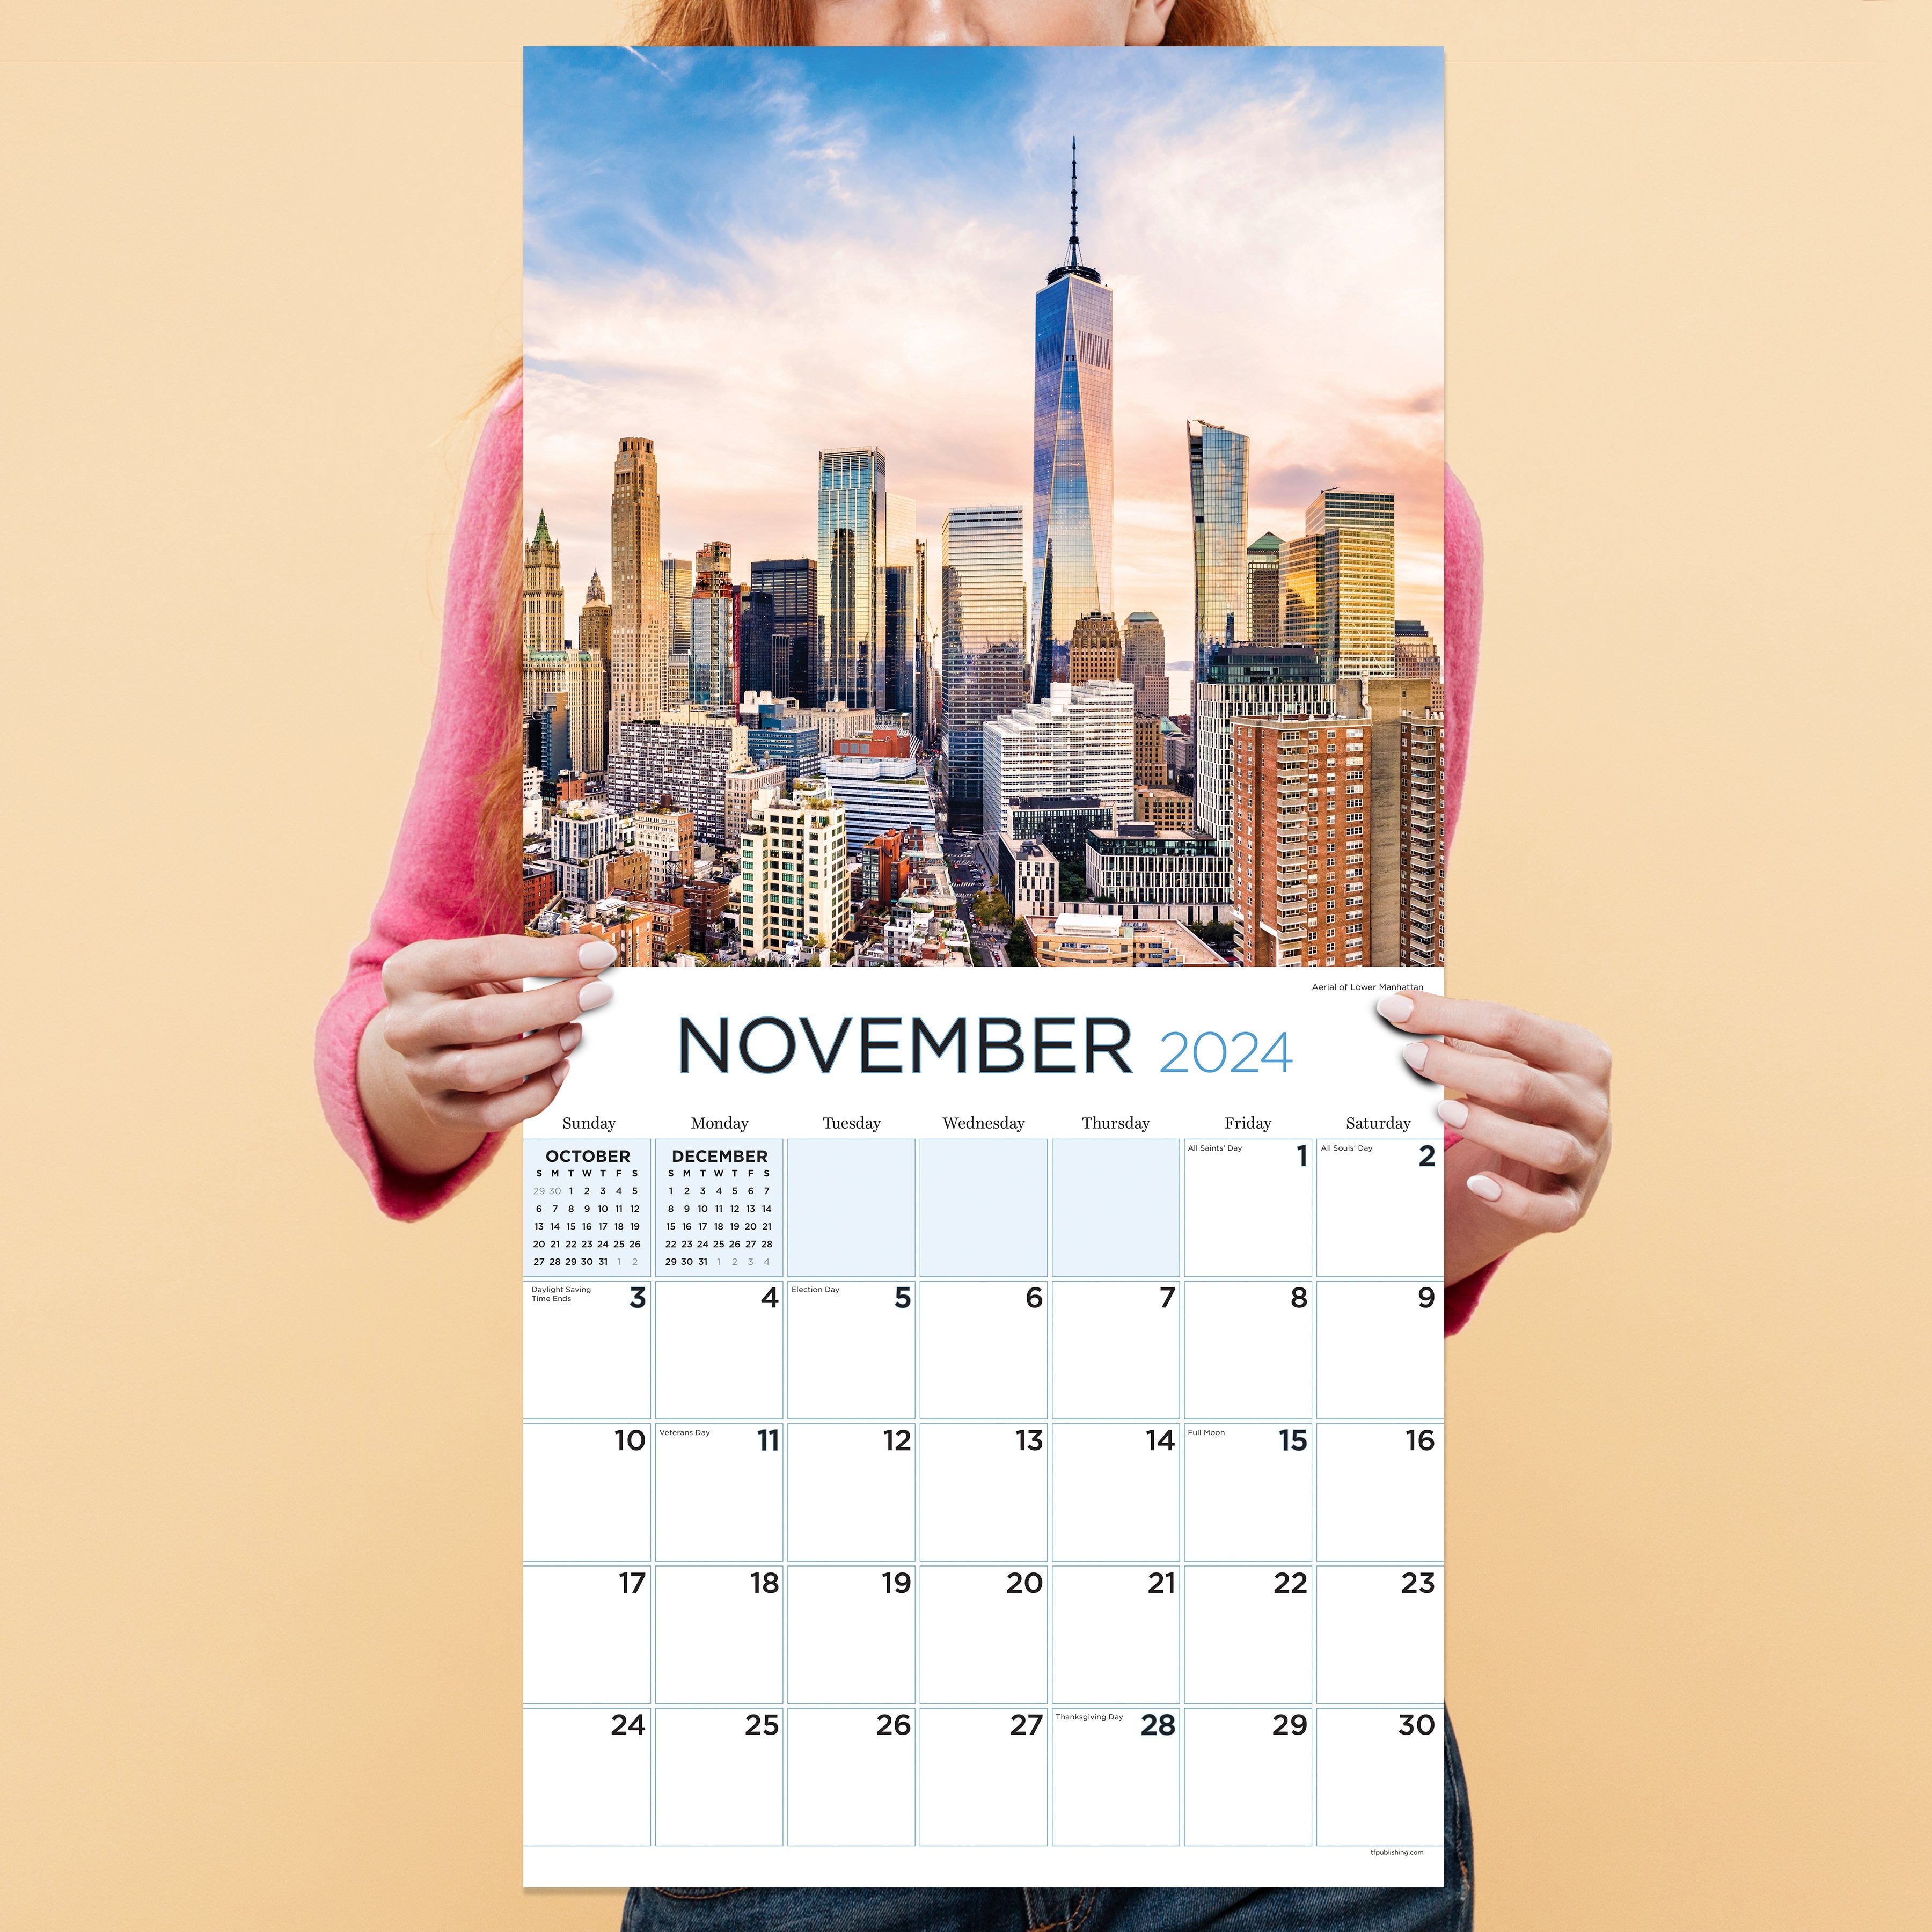 2024 NYC Square Wall Calendar Travel Calendars by TF Publishing